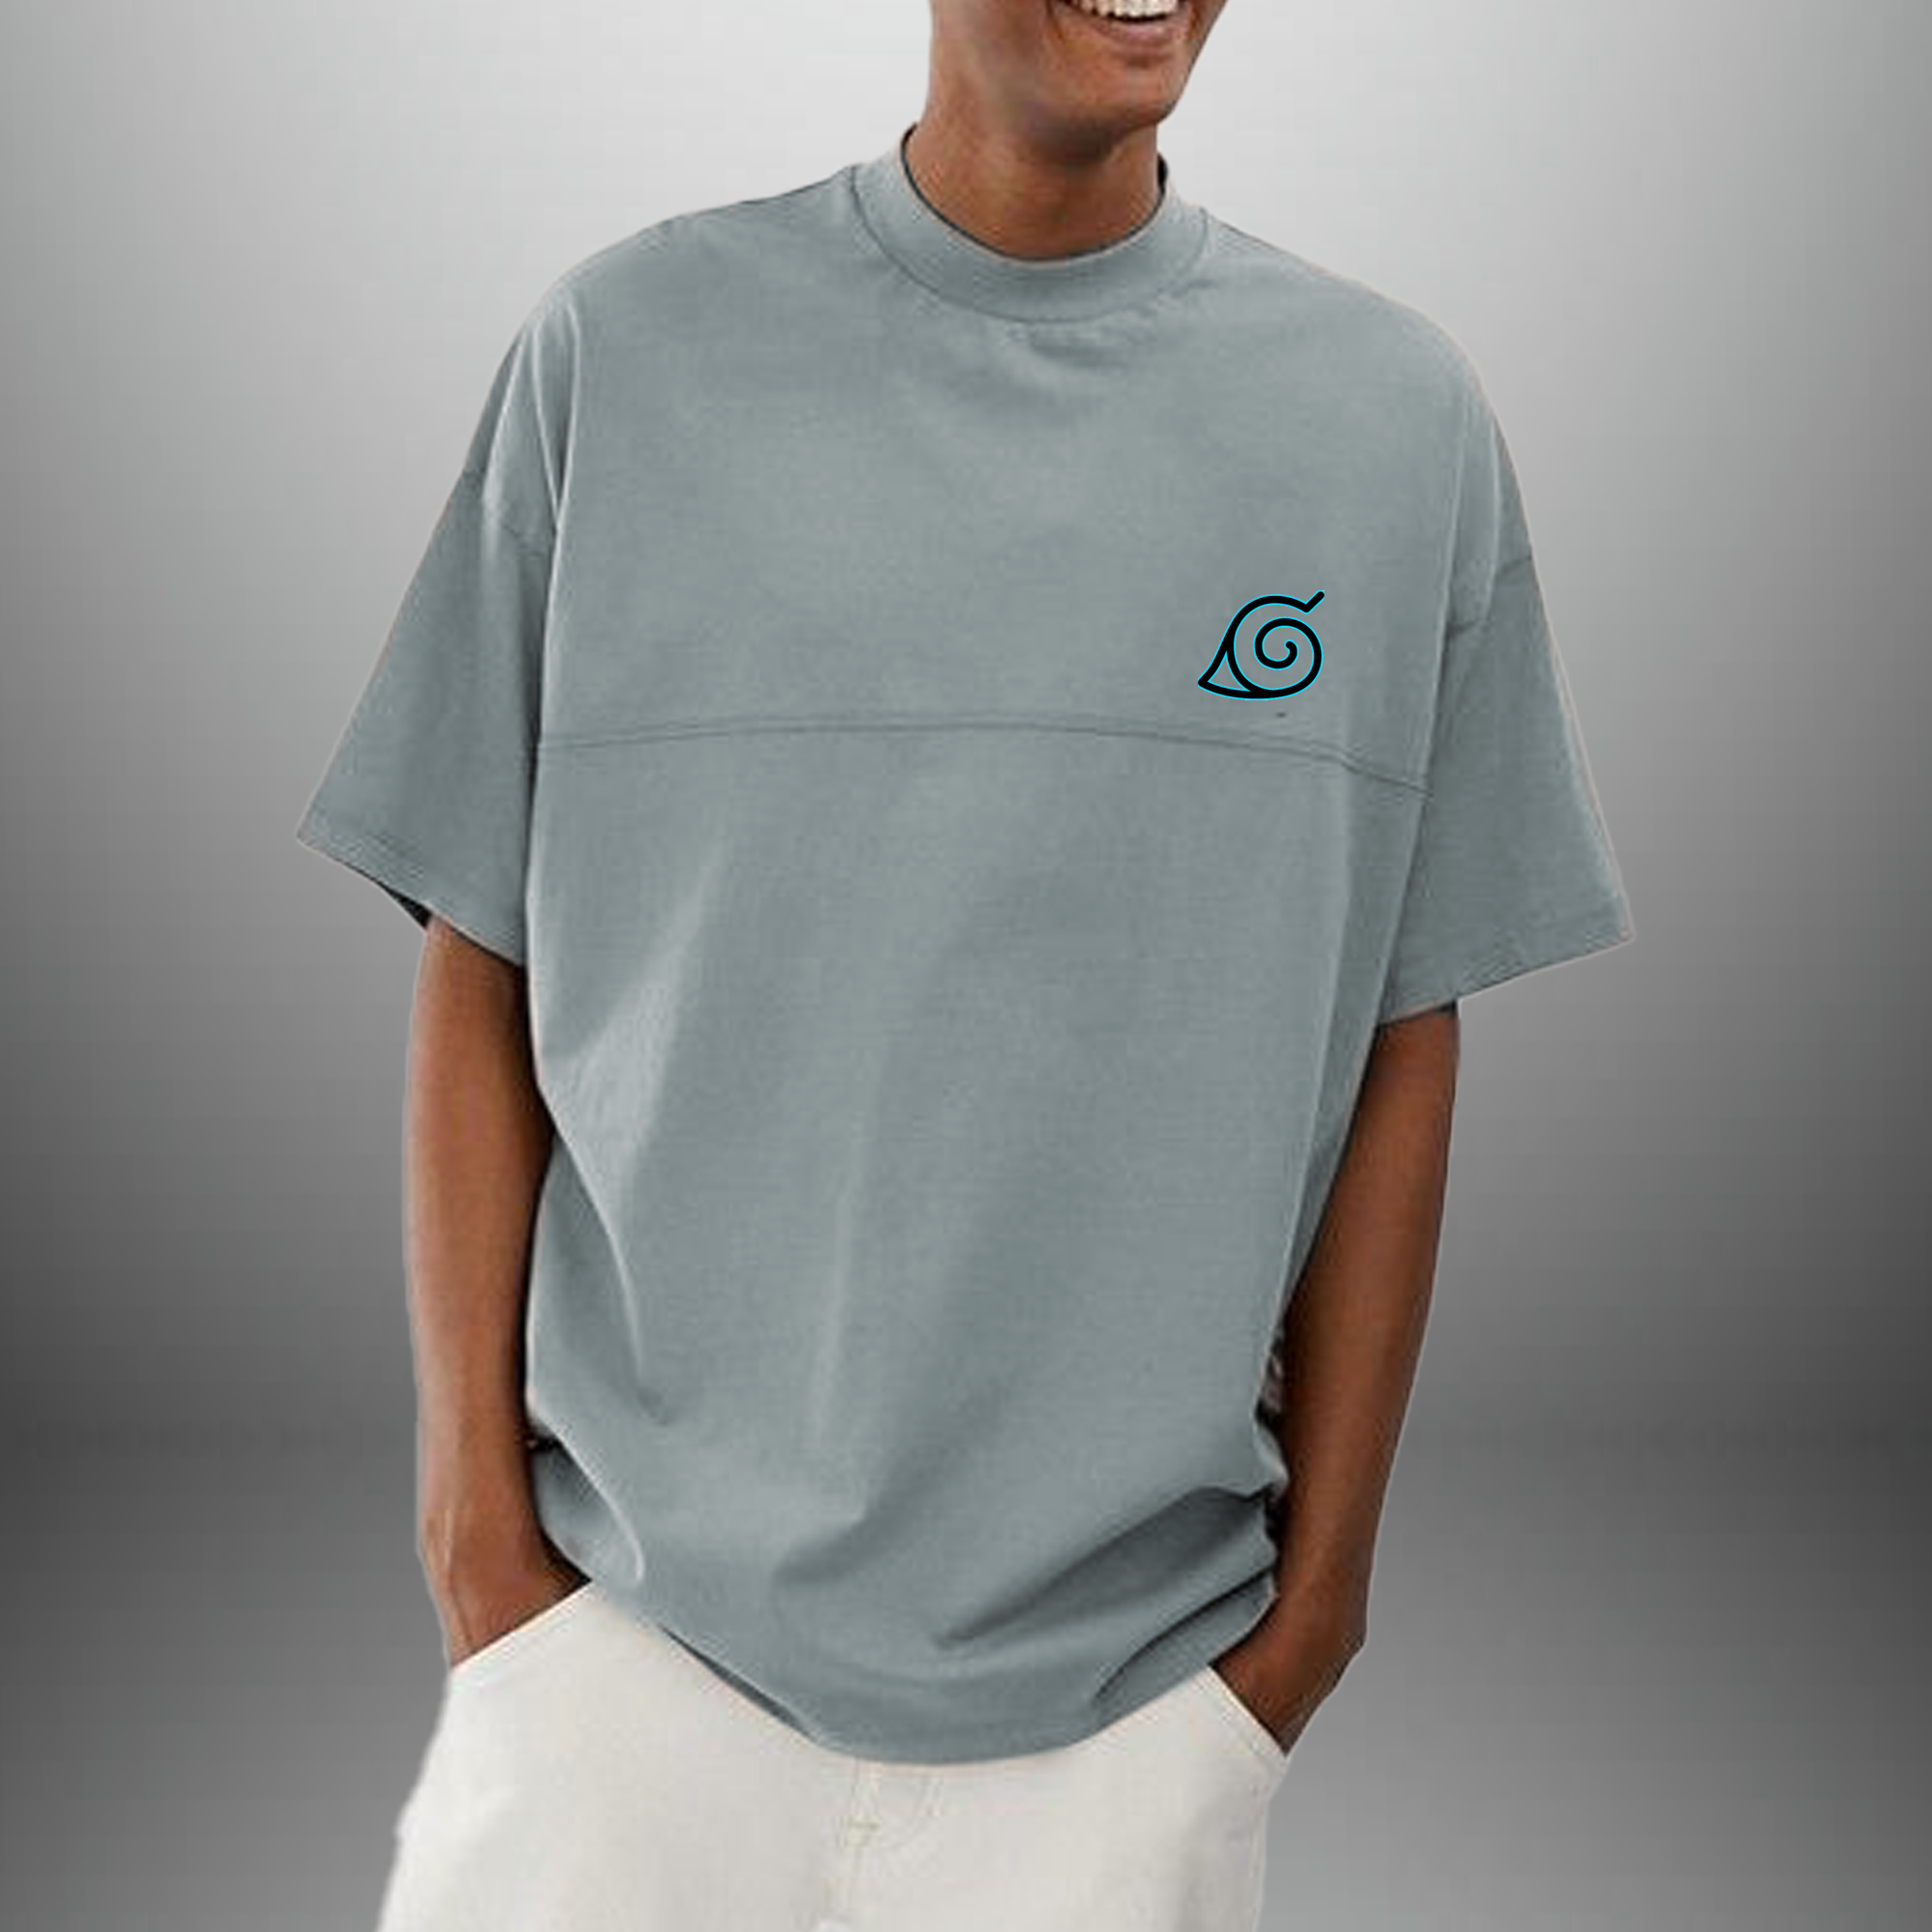 Men's sky grey round neck T-shirt with naruto symbol-RKTM009